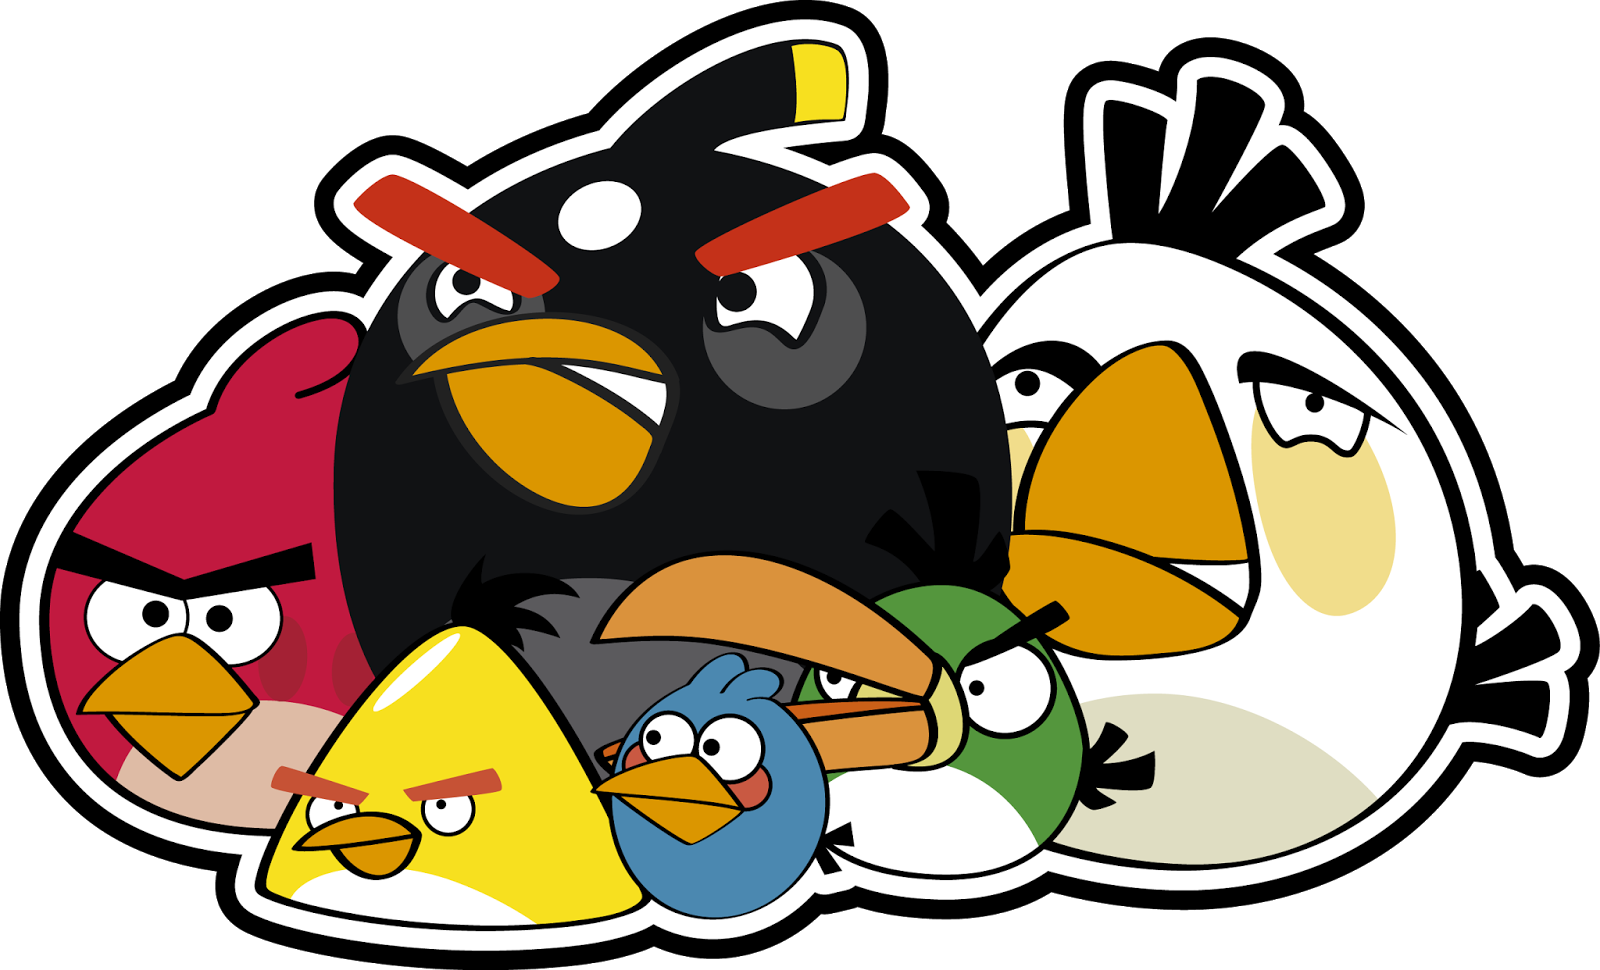 Angry birds 1.5 2. Энгри бердз злые птички. Злые птички Рио 2. Птицы Энгри бердз. Angry Birds картинки.